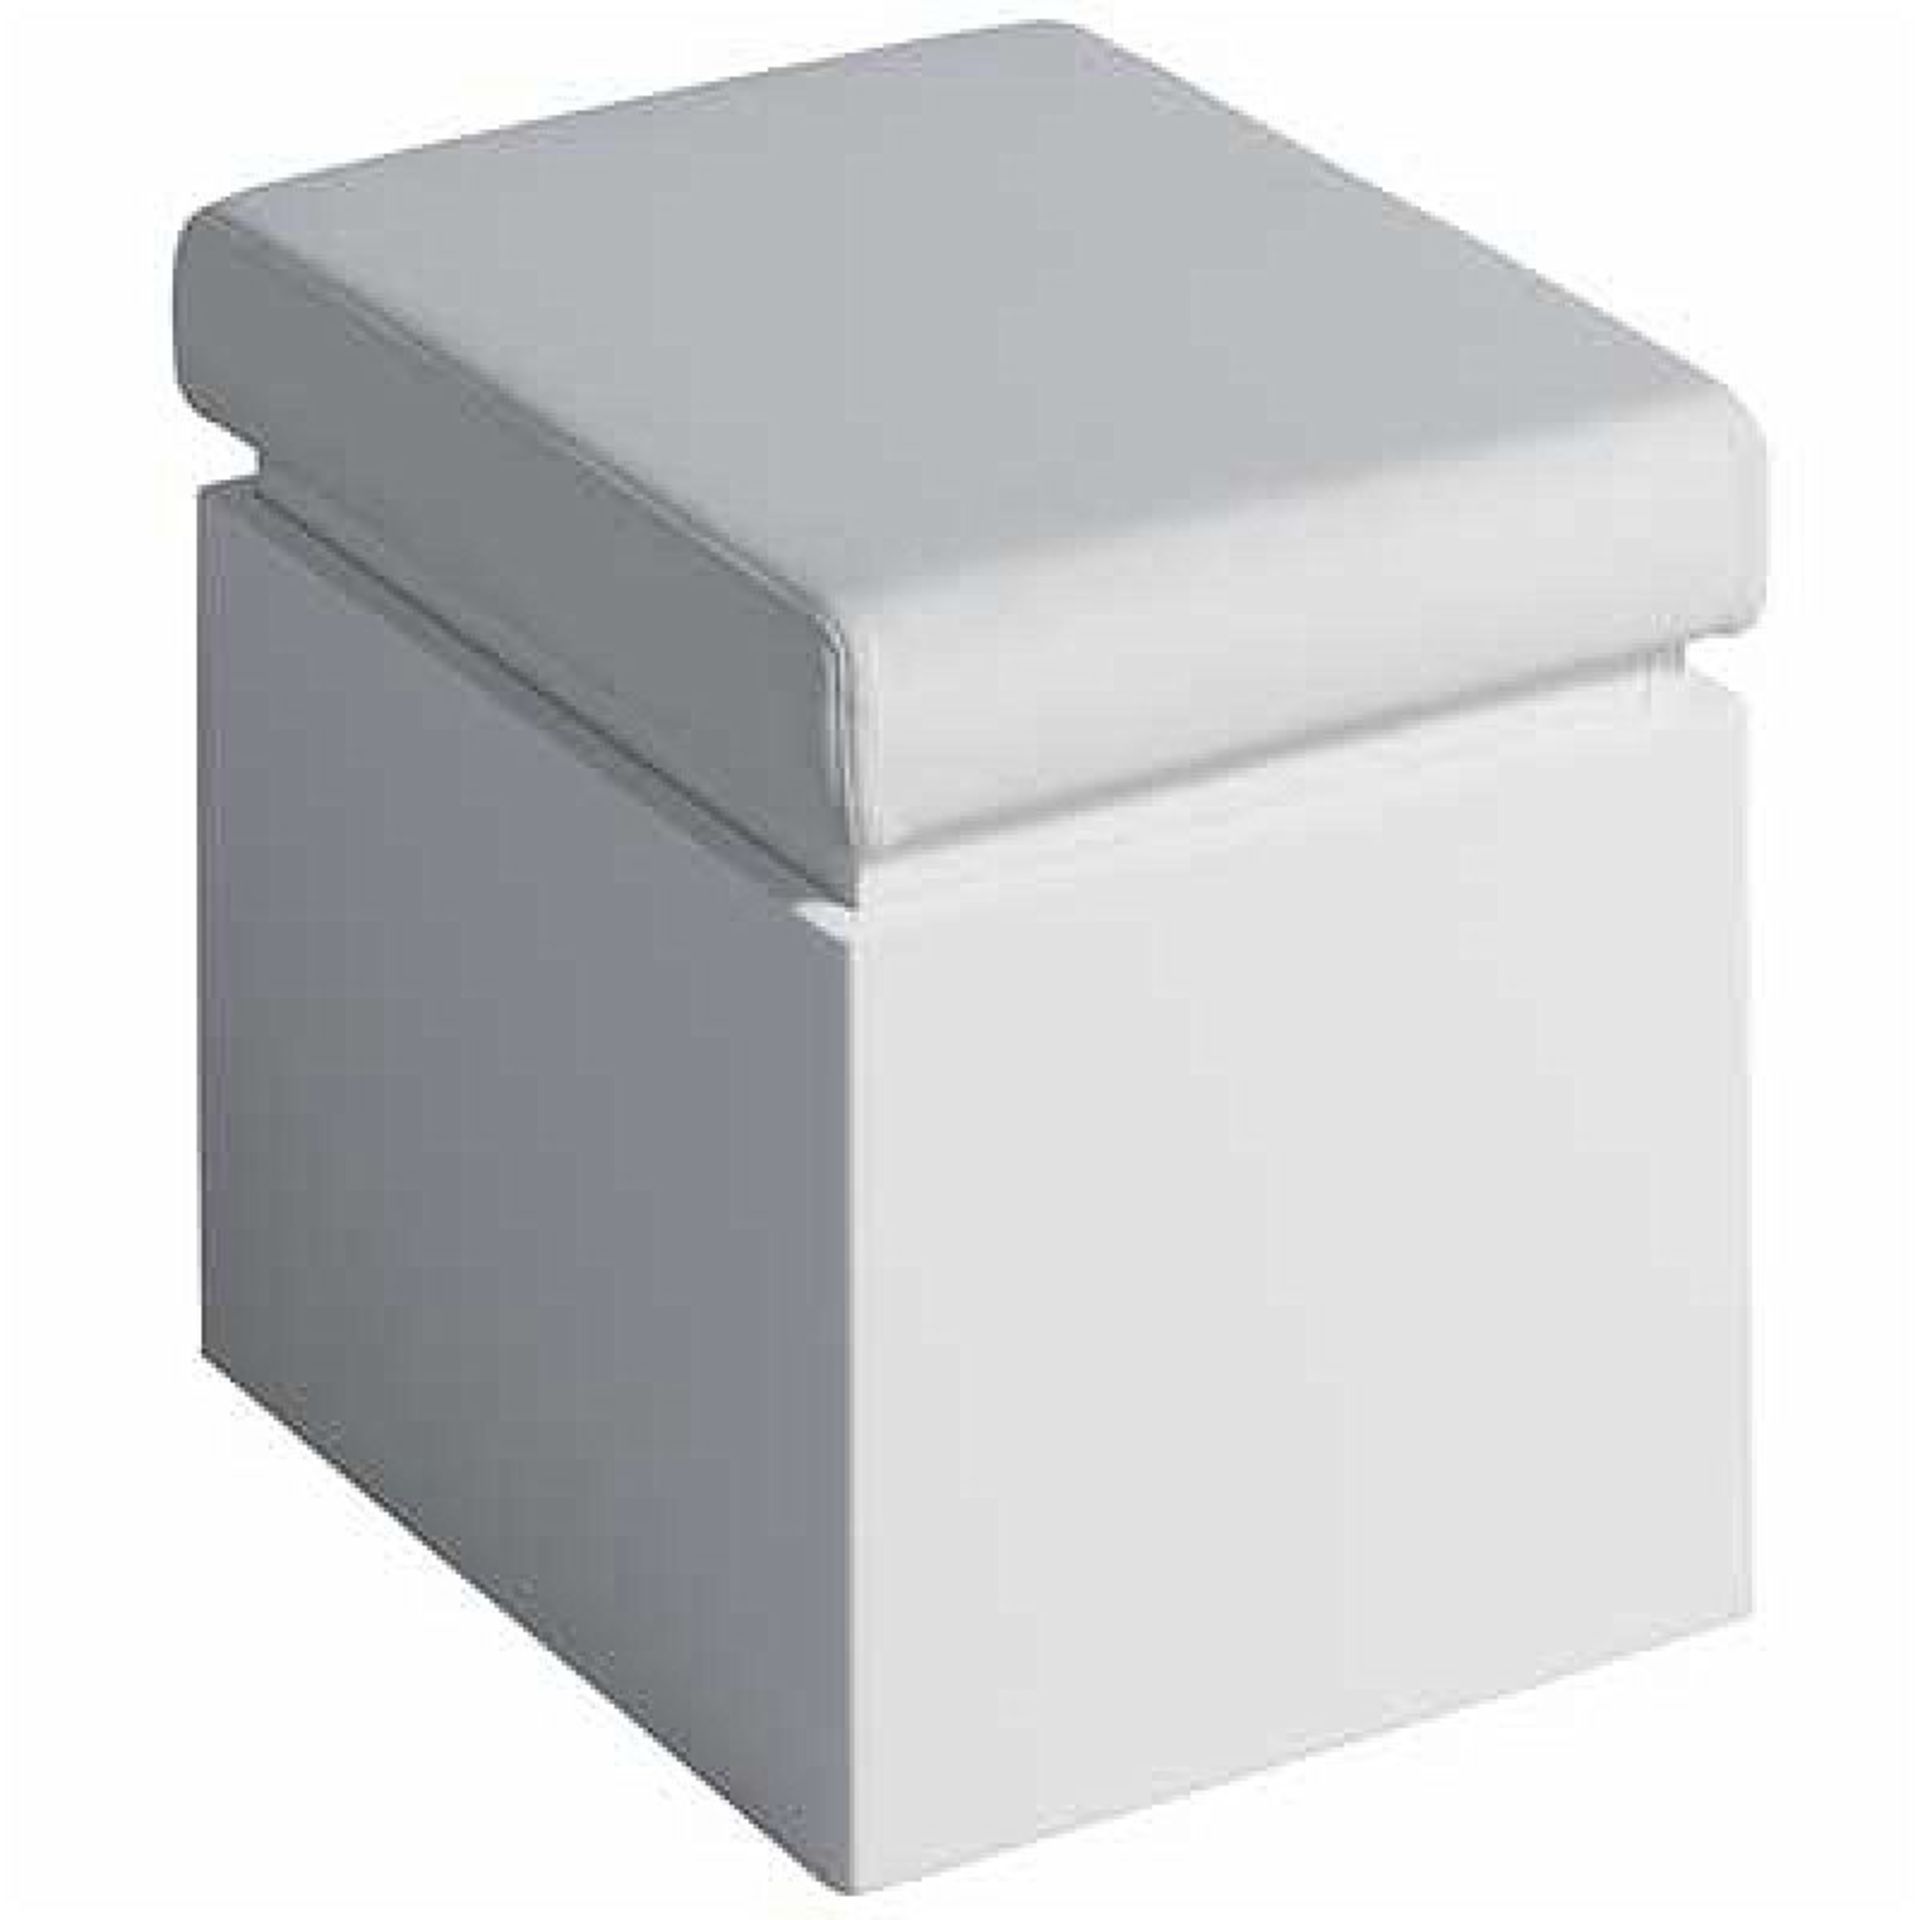 New Twyford White Bathroom Seat With Storage.RRP £254.99.Ta0901Wh.The Twyford White Bathroom Seat - Image 2 of 2